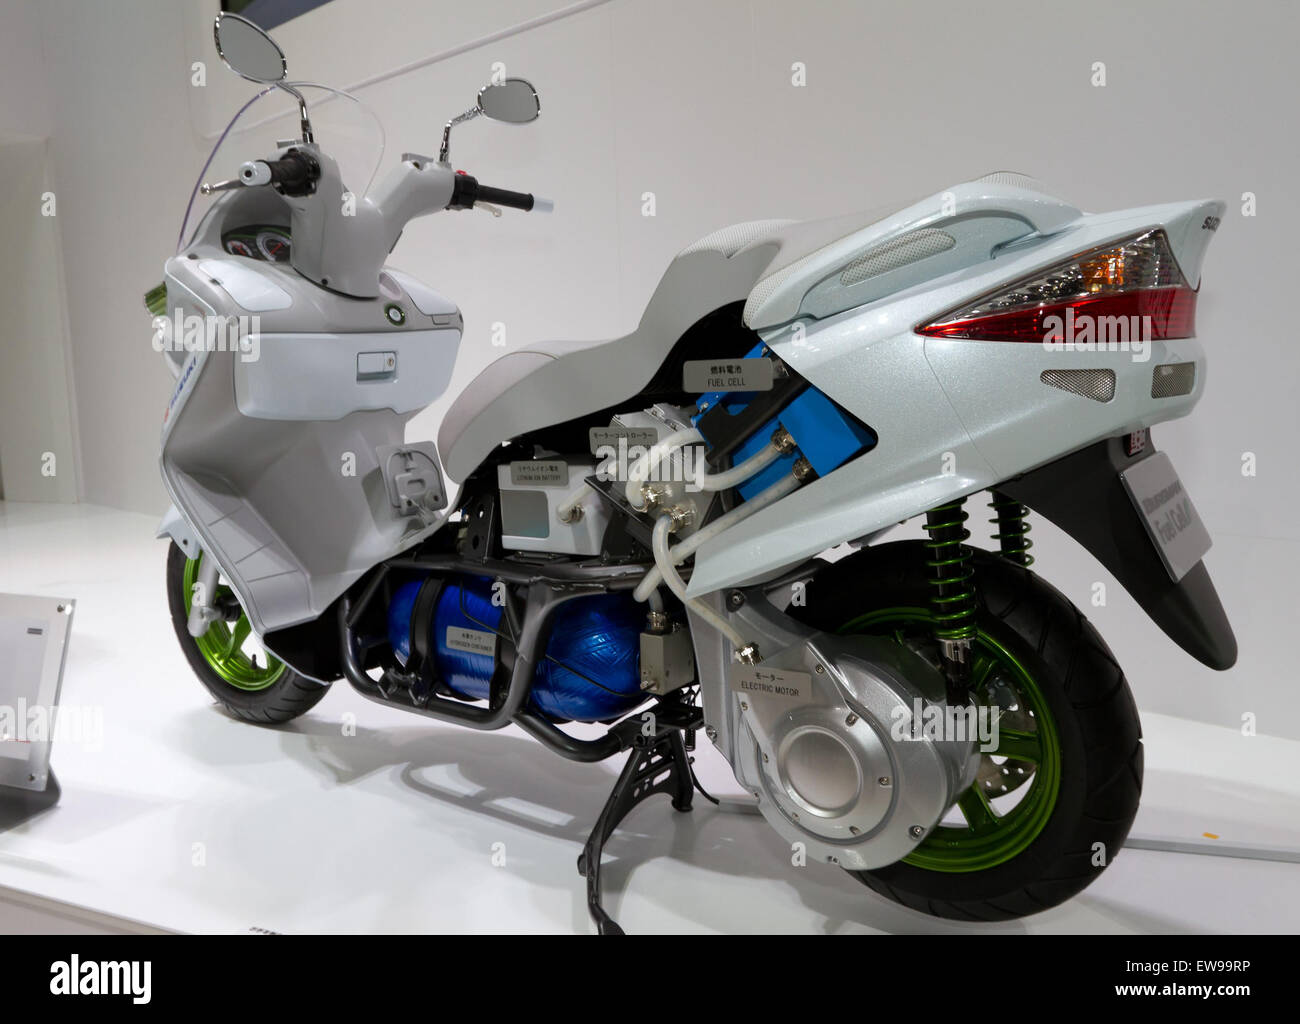 Suzuki Burgman Fuel Cell Cutaway Modell 2011 Tokyo Motor Show Stockfoto